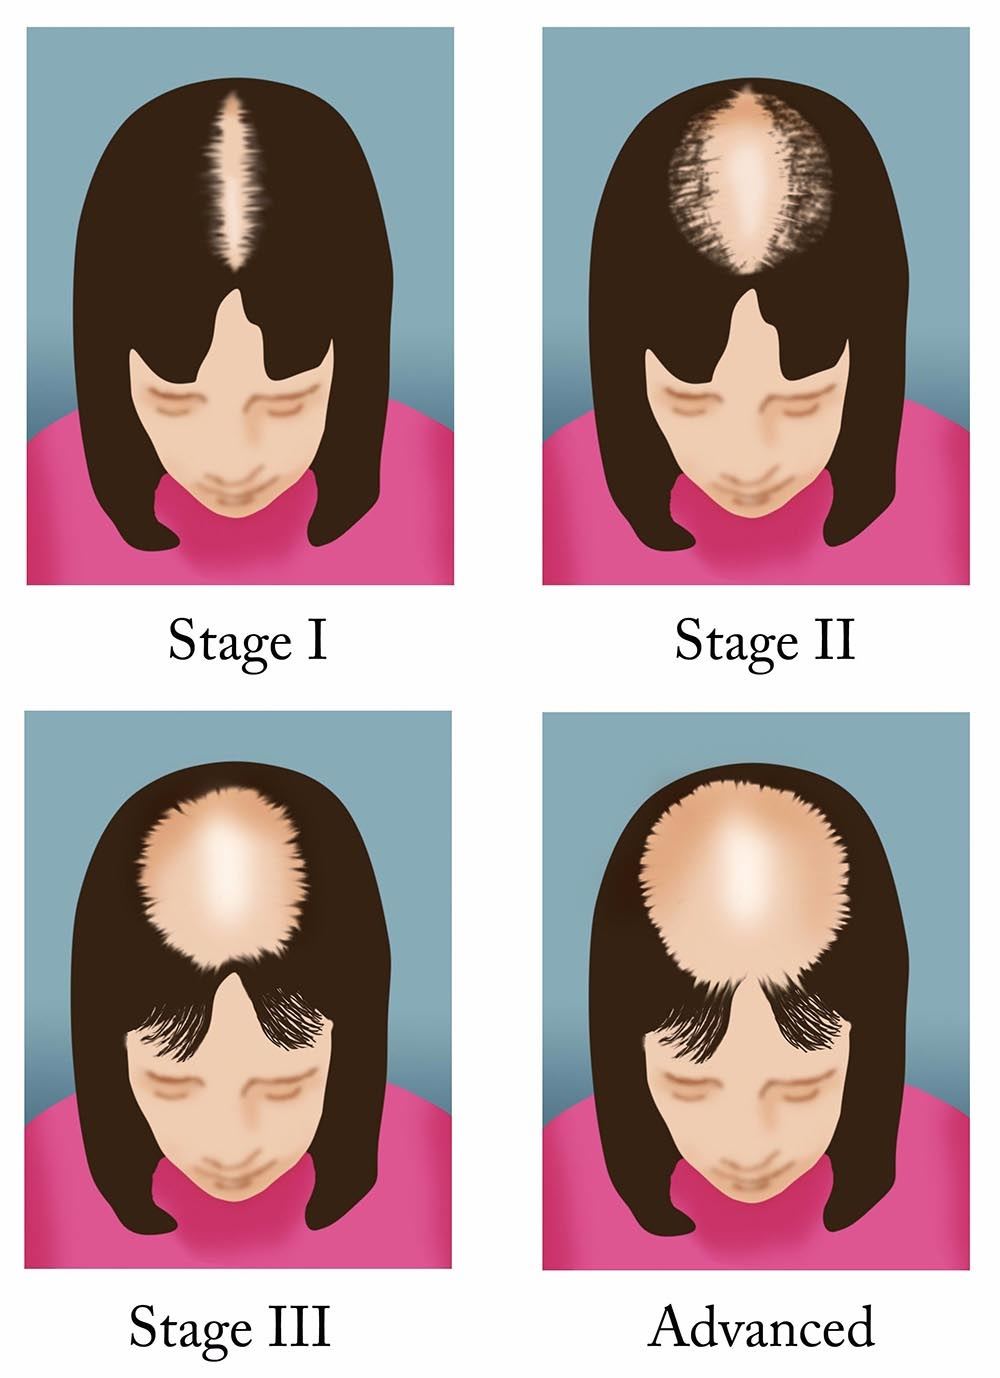 Female pattern baldness | healthdirect